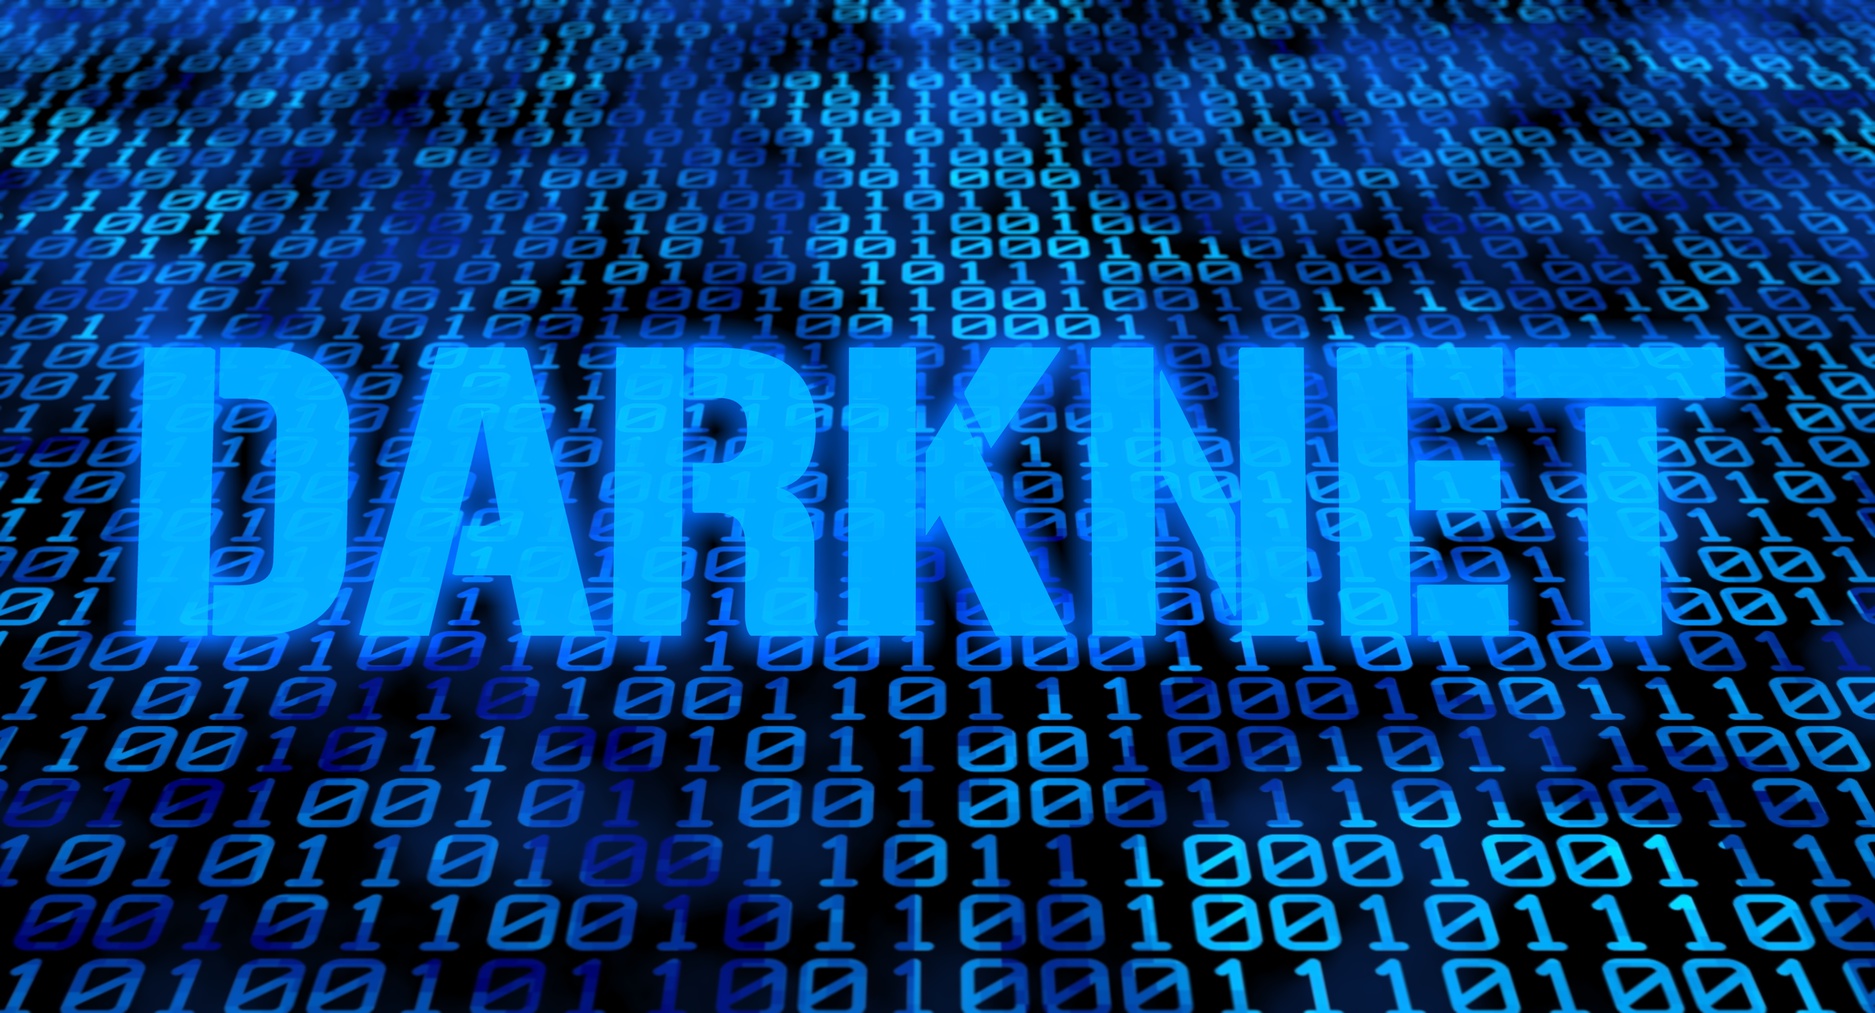 Dark Web Links 2022